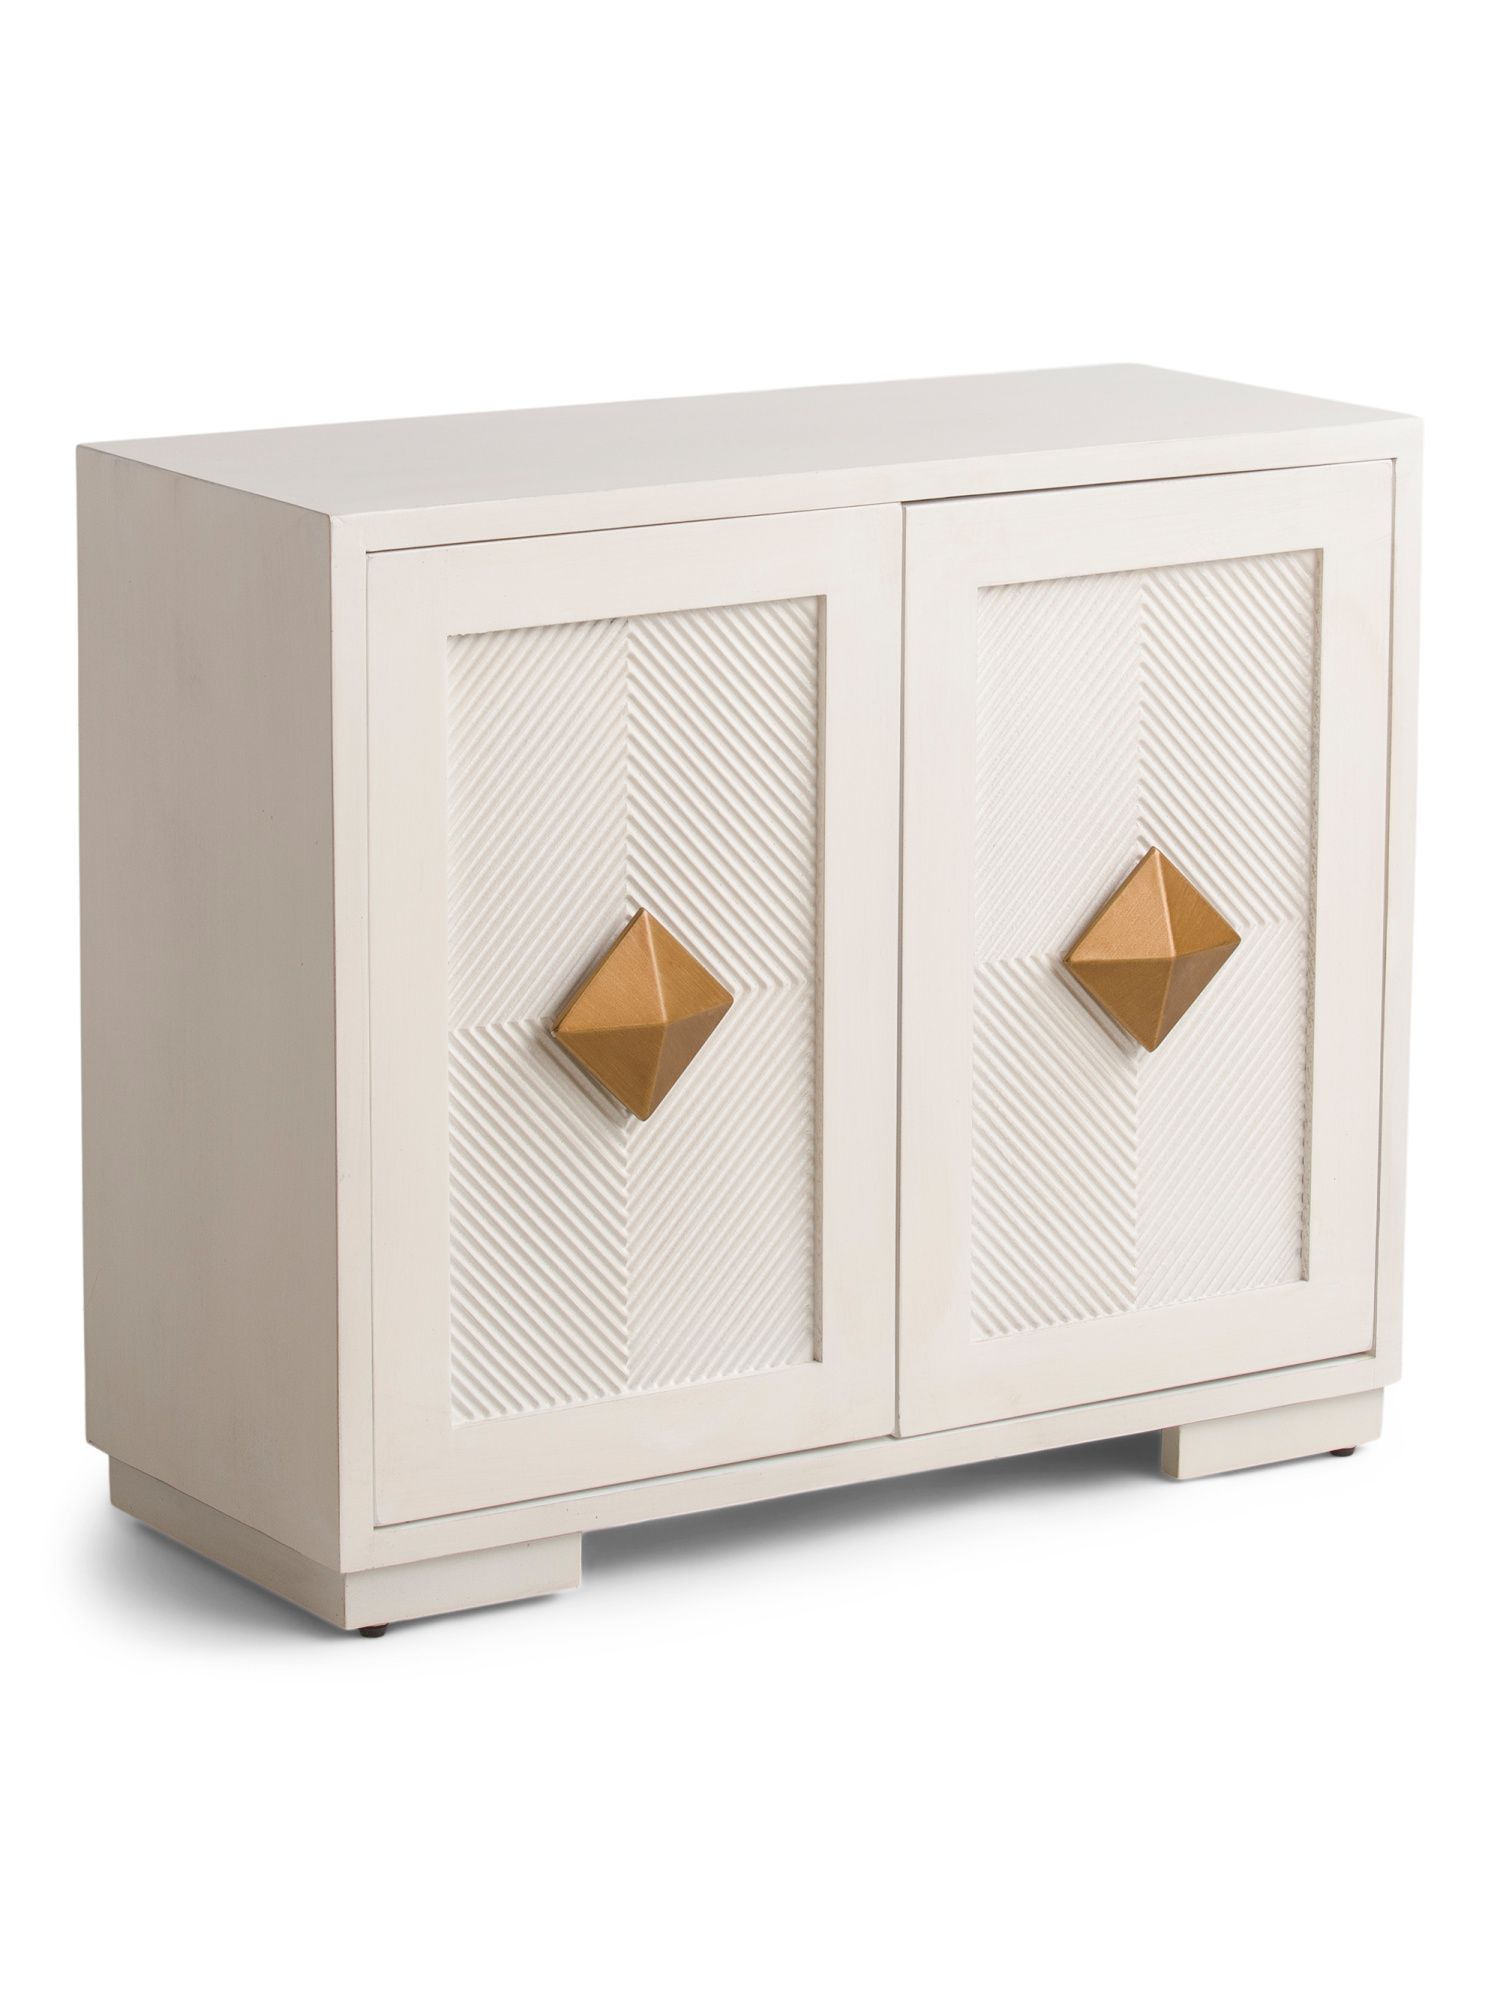 2 Door Diamond Handle Cabinet | TJ Maxx